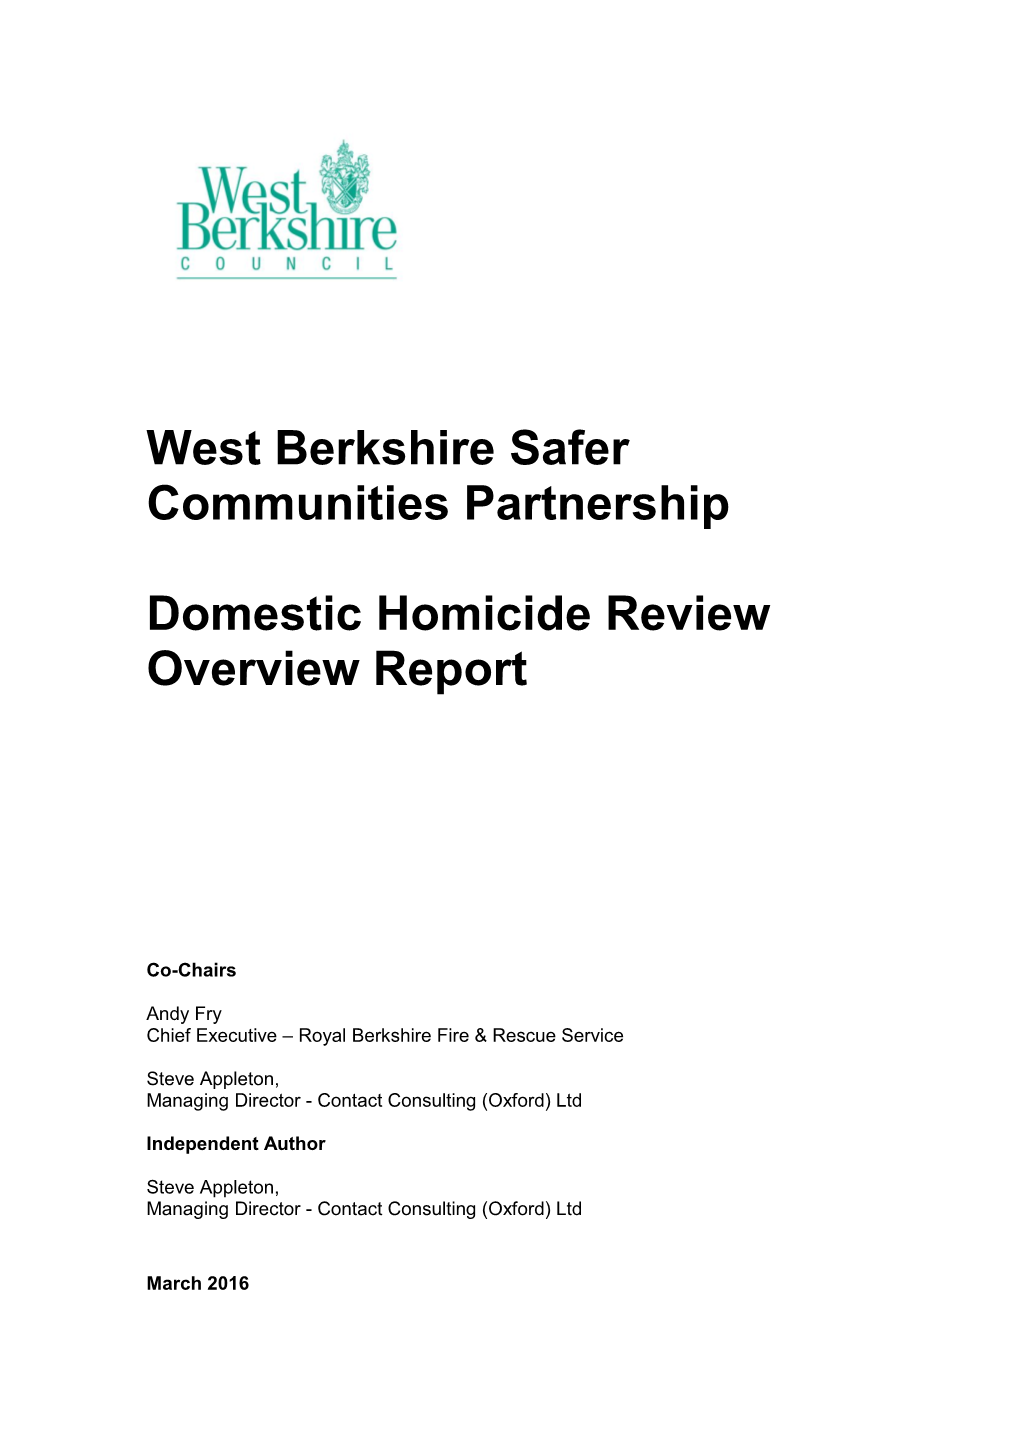 West Berkshire Safer Communities Partnership Domestic Homicide